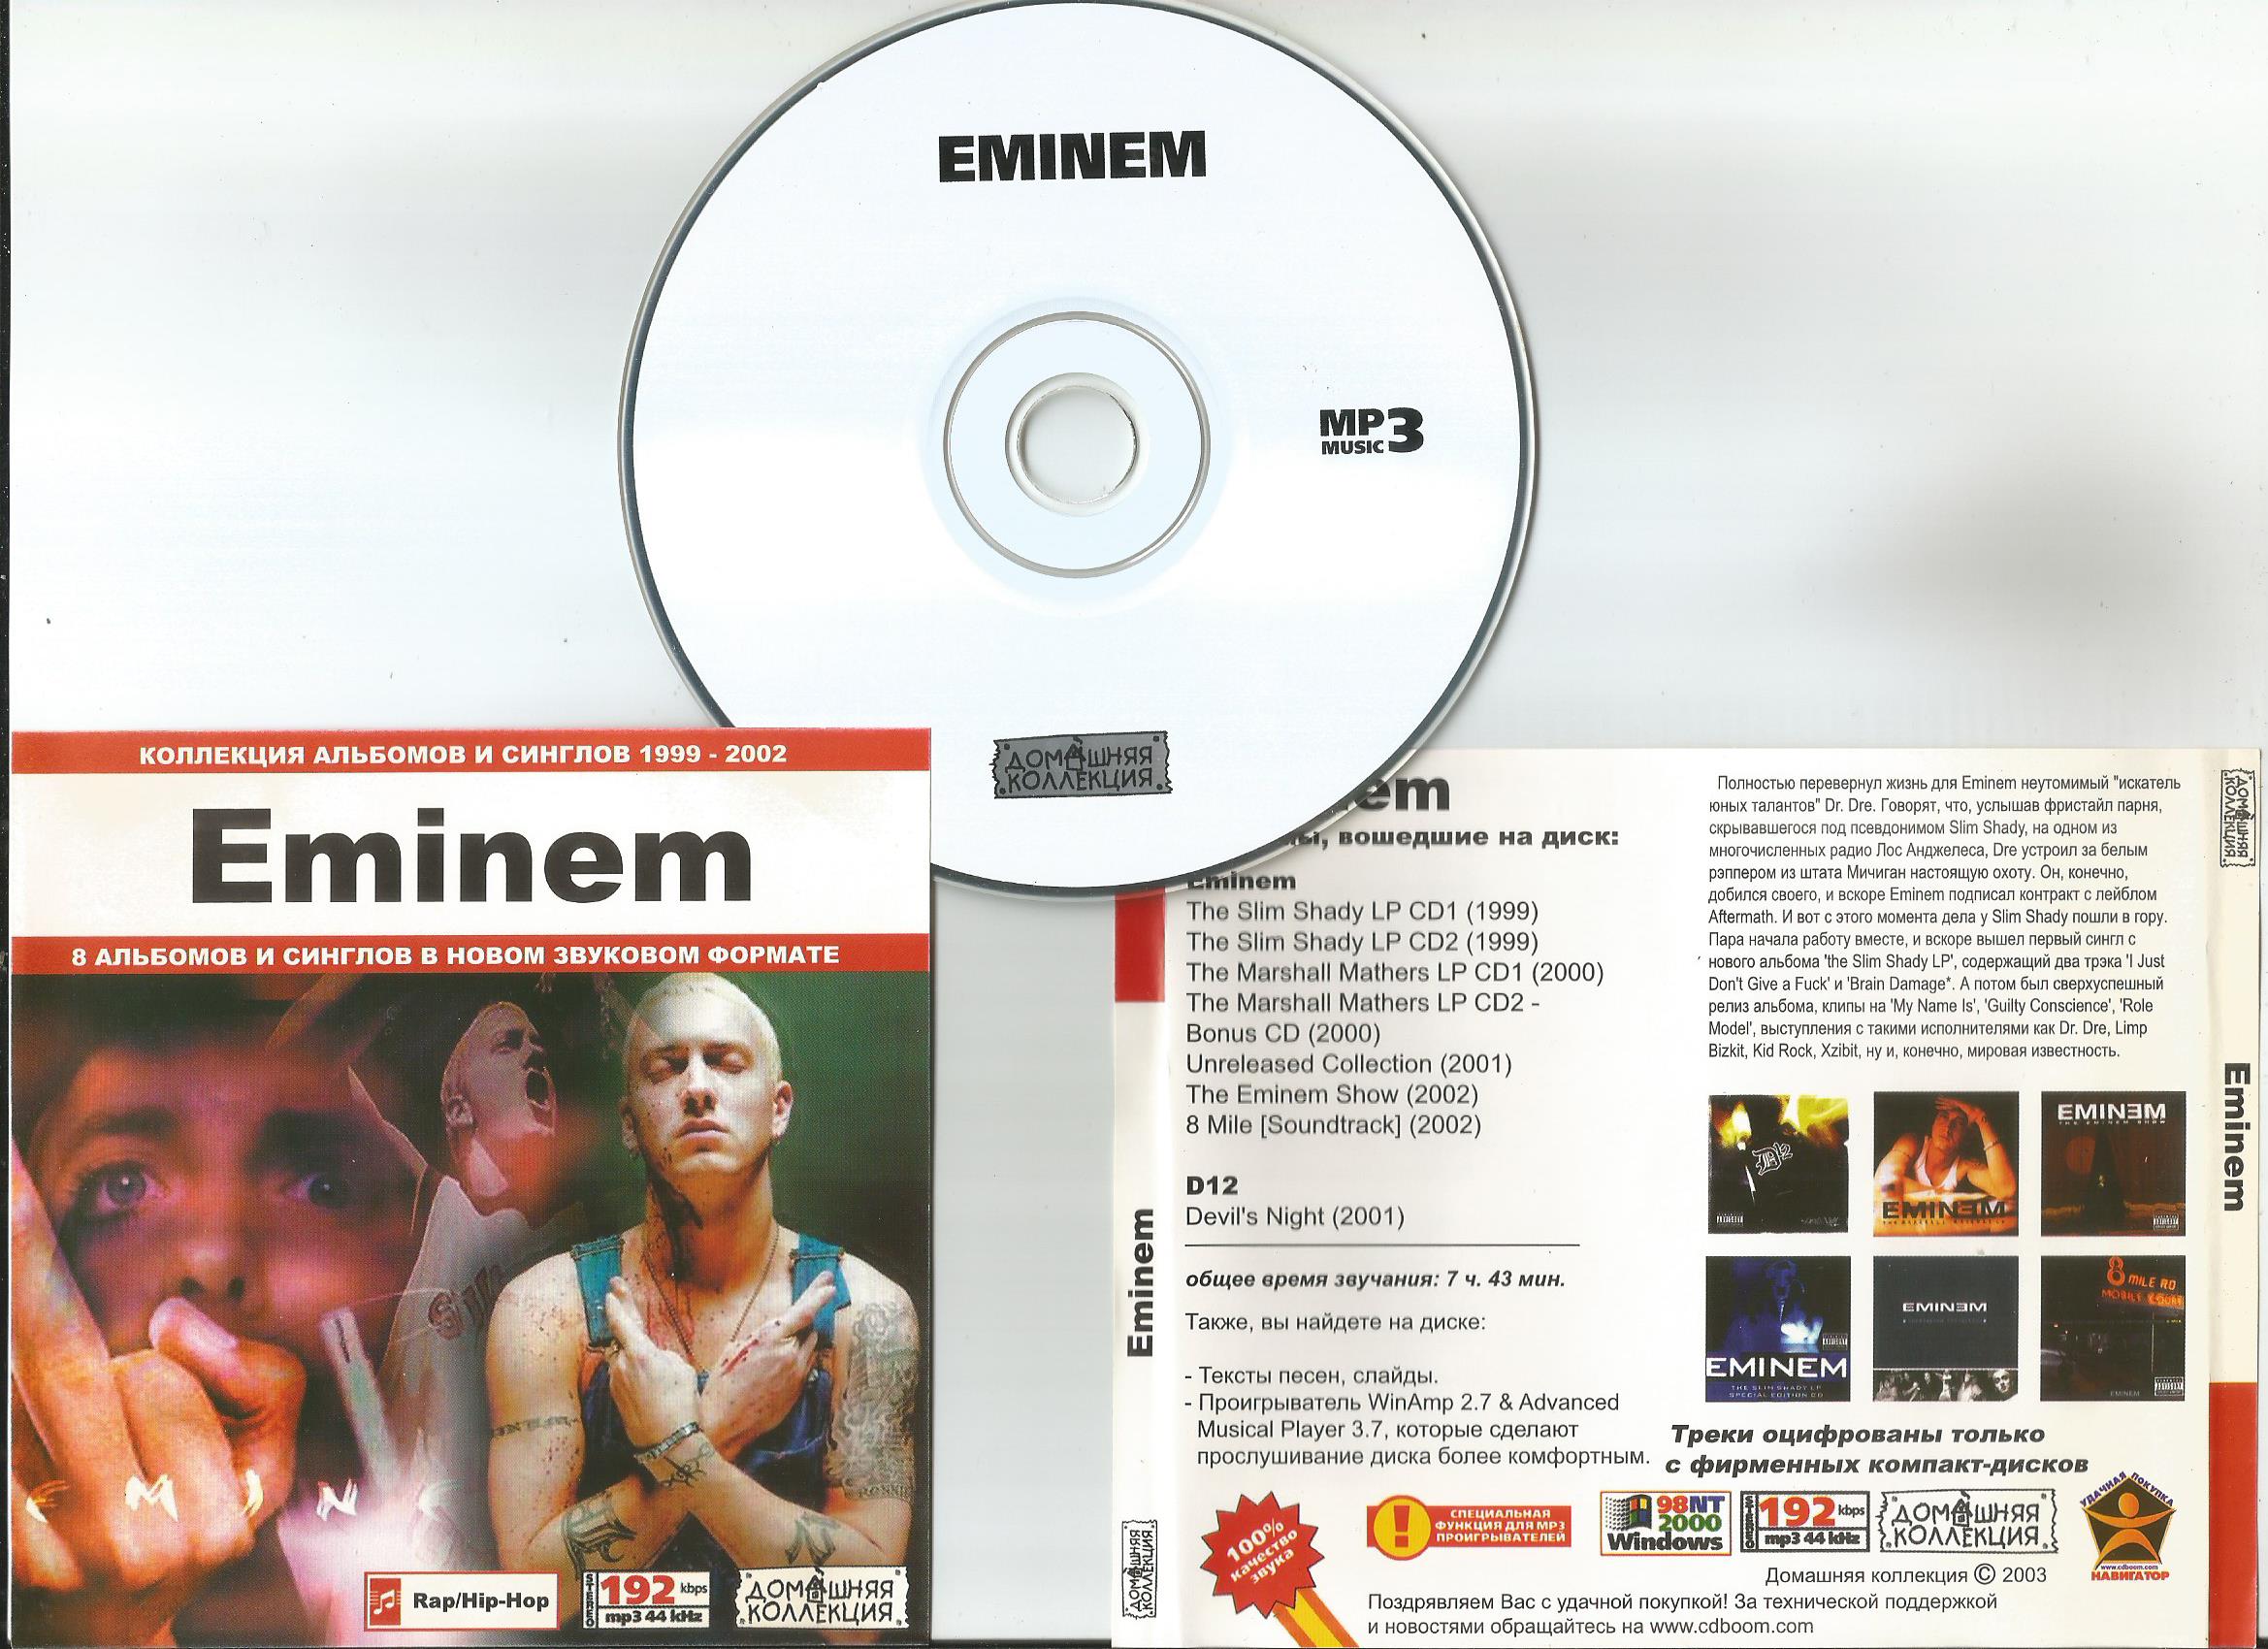 The marshall mathers lp - Eminem (アルバム)2338 x 1700